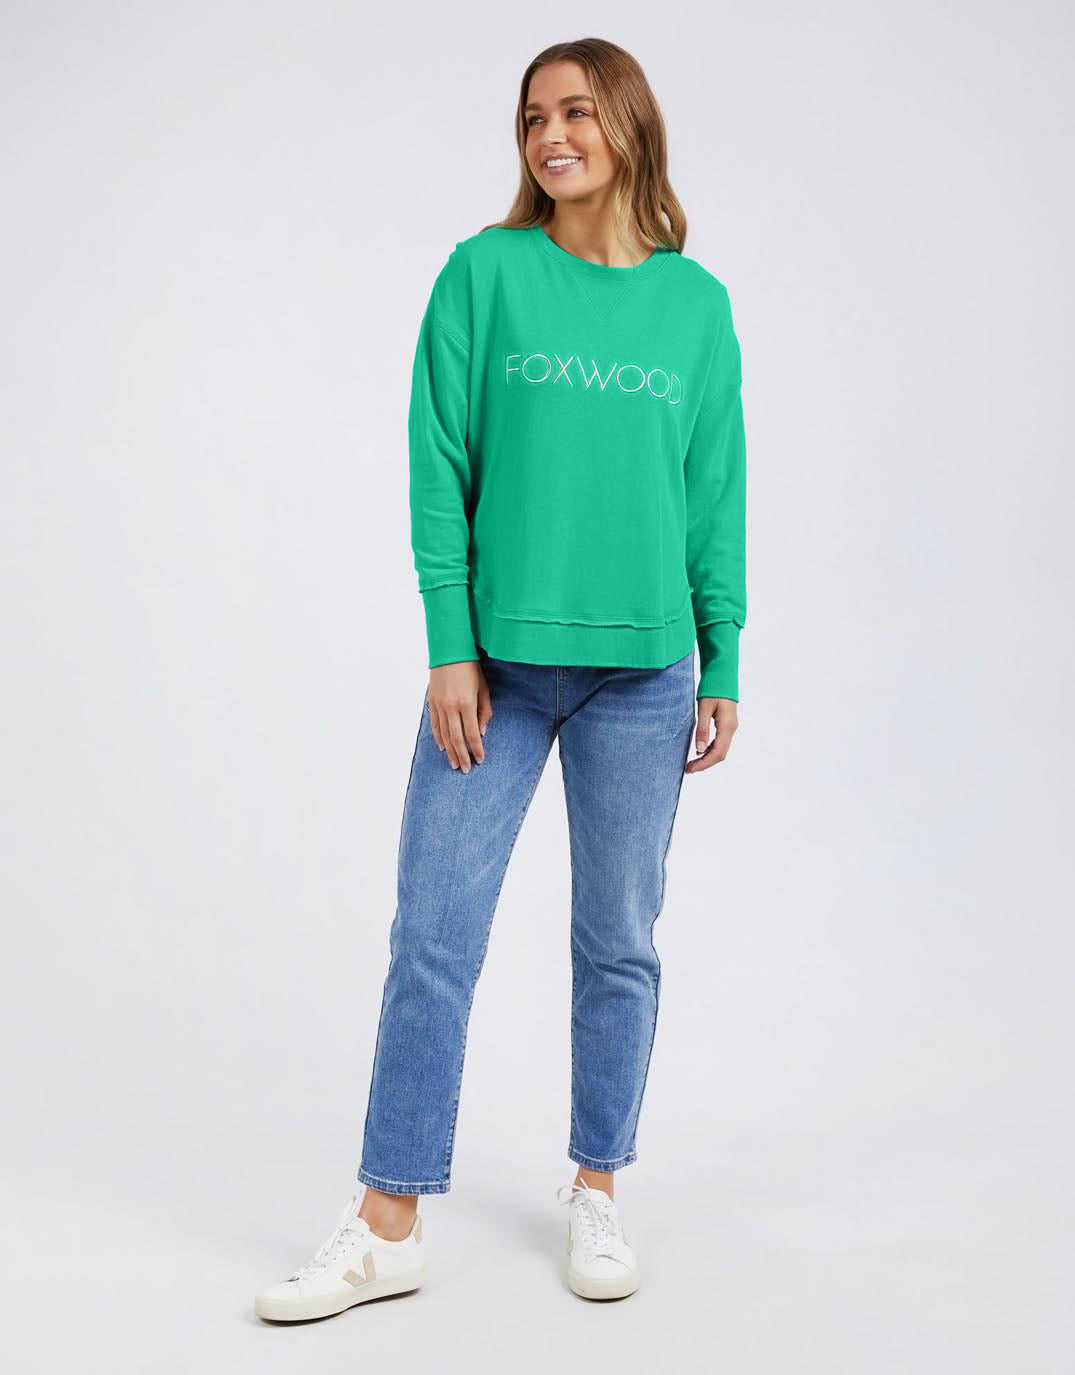 foxwood-simplified-metallic-crew-green-womens-clothing